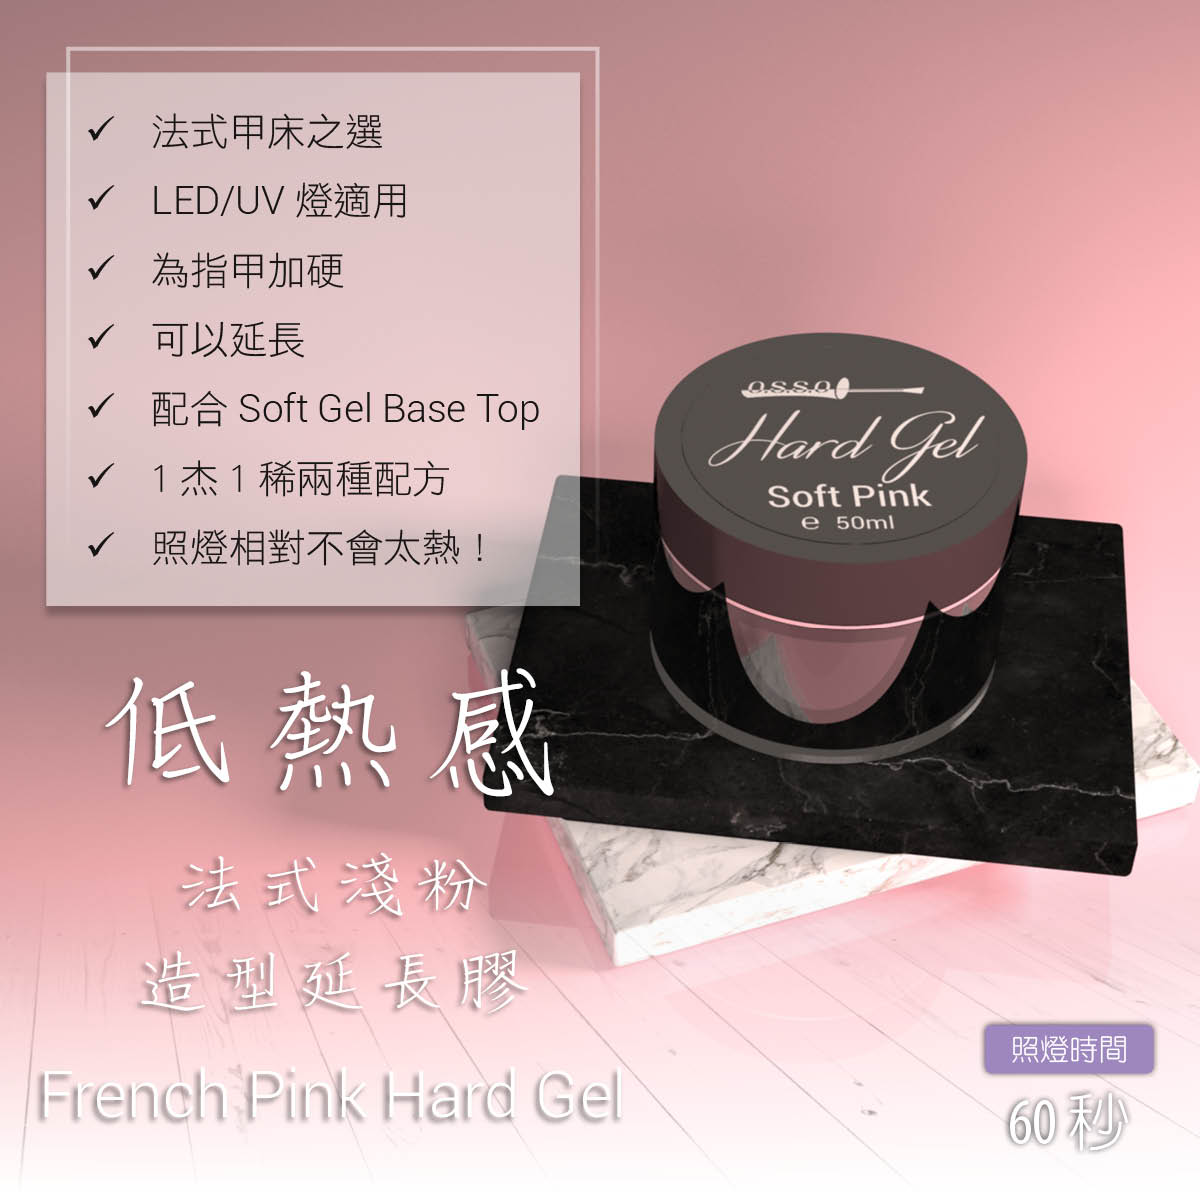 French Pink Hard Gel